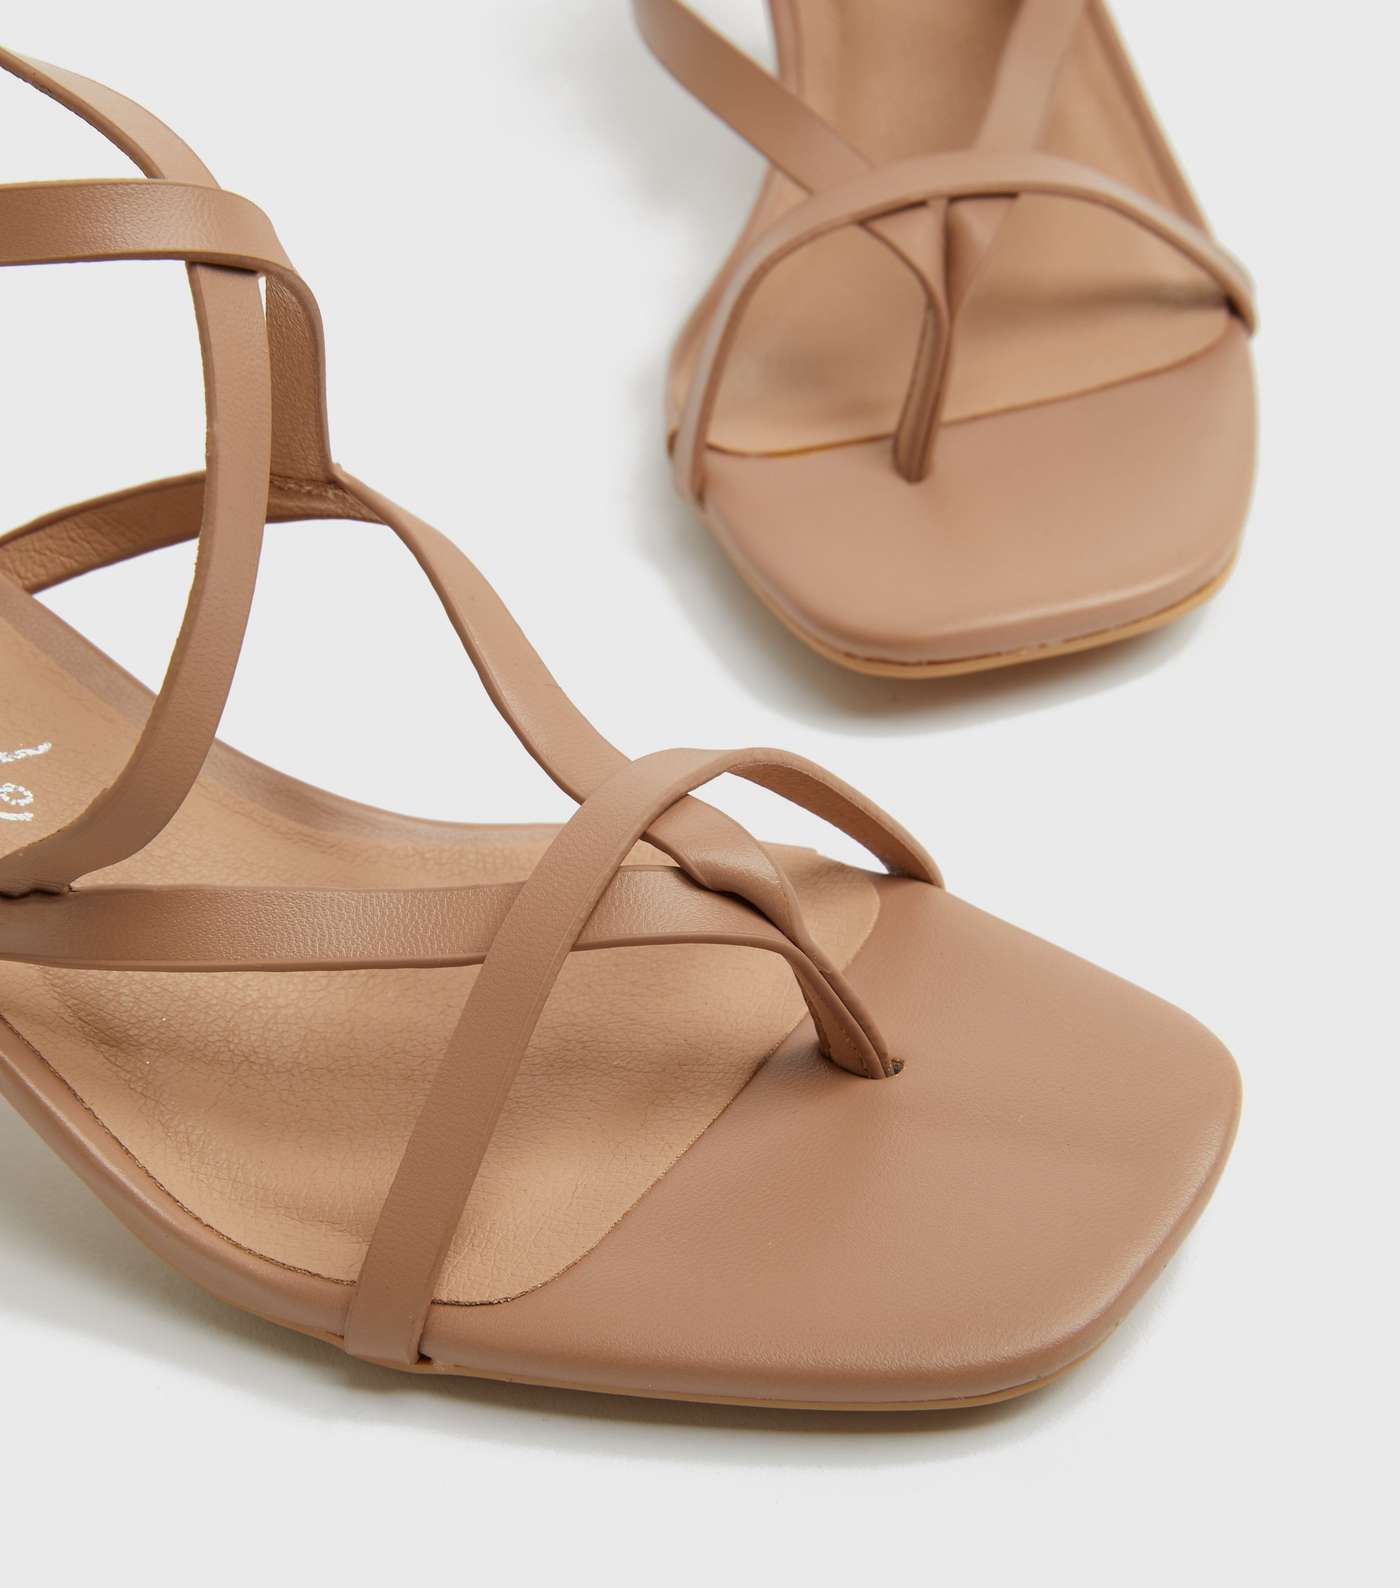 Cream Strappy Stiletto Heel Sandals Image 4